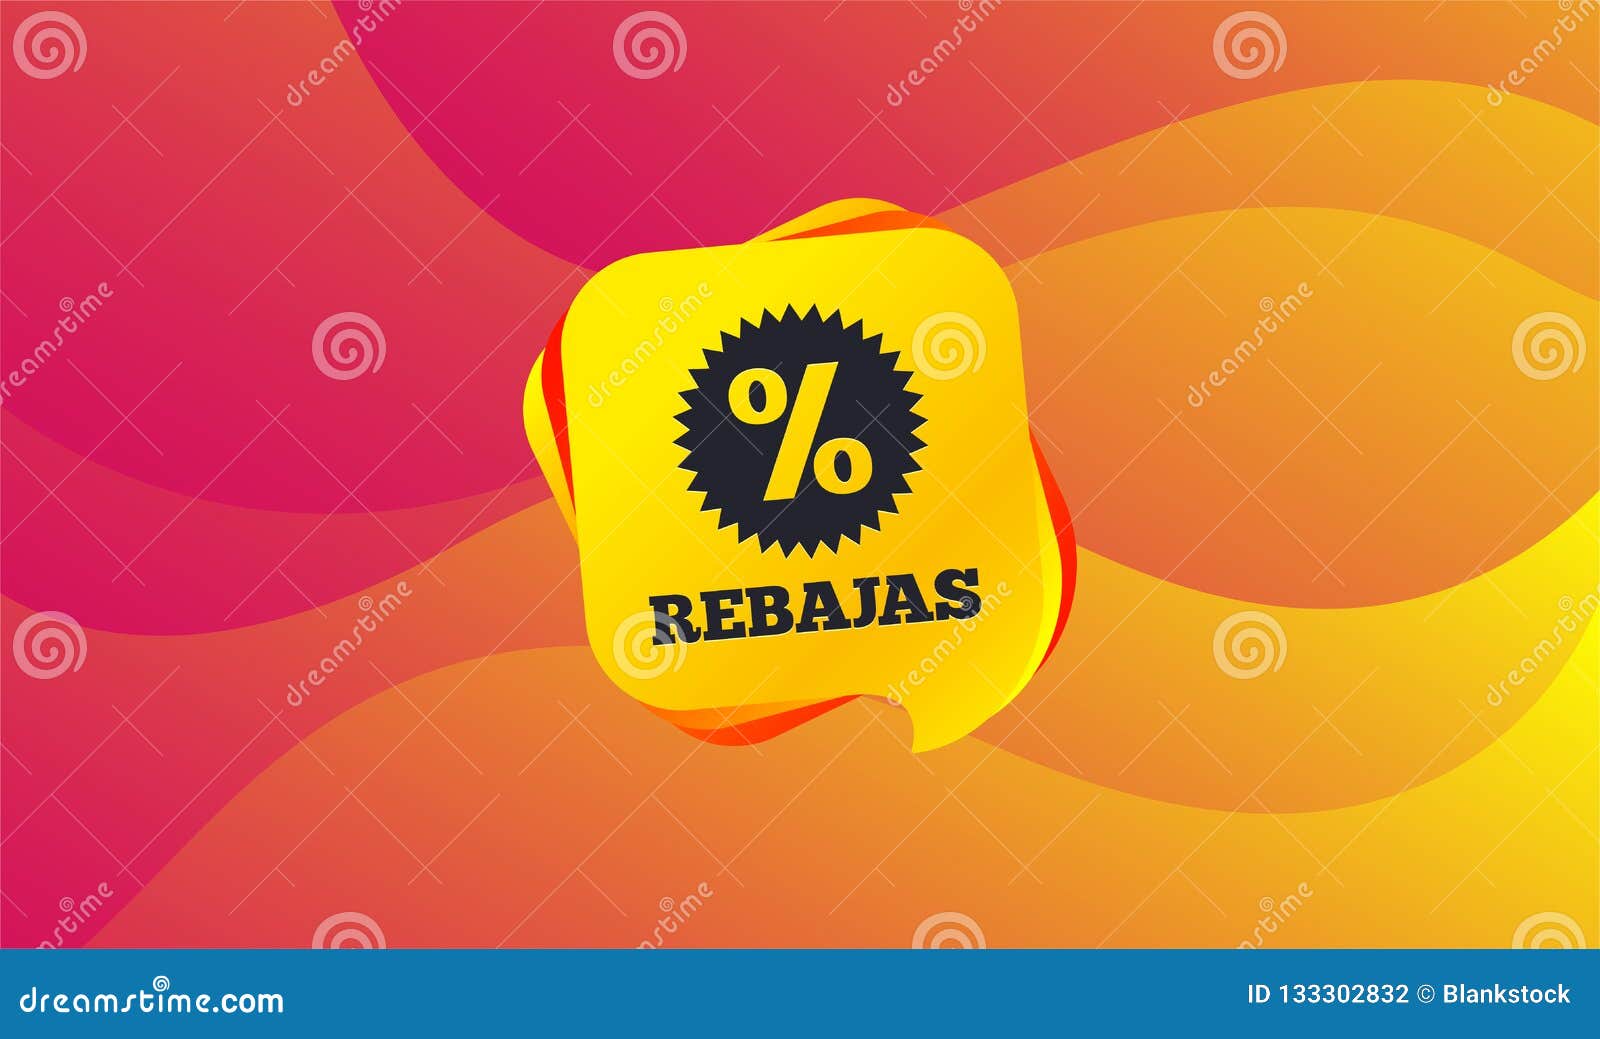 rebajas - discounts in spain sign icon. star. 